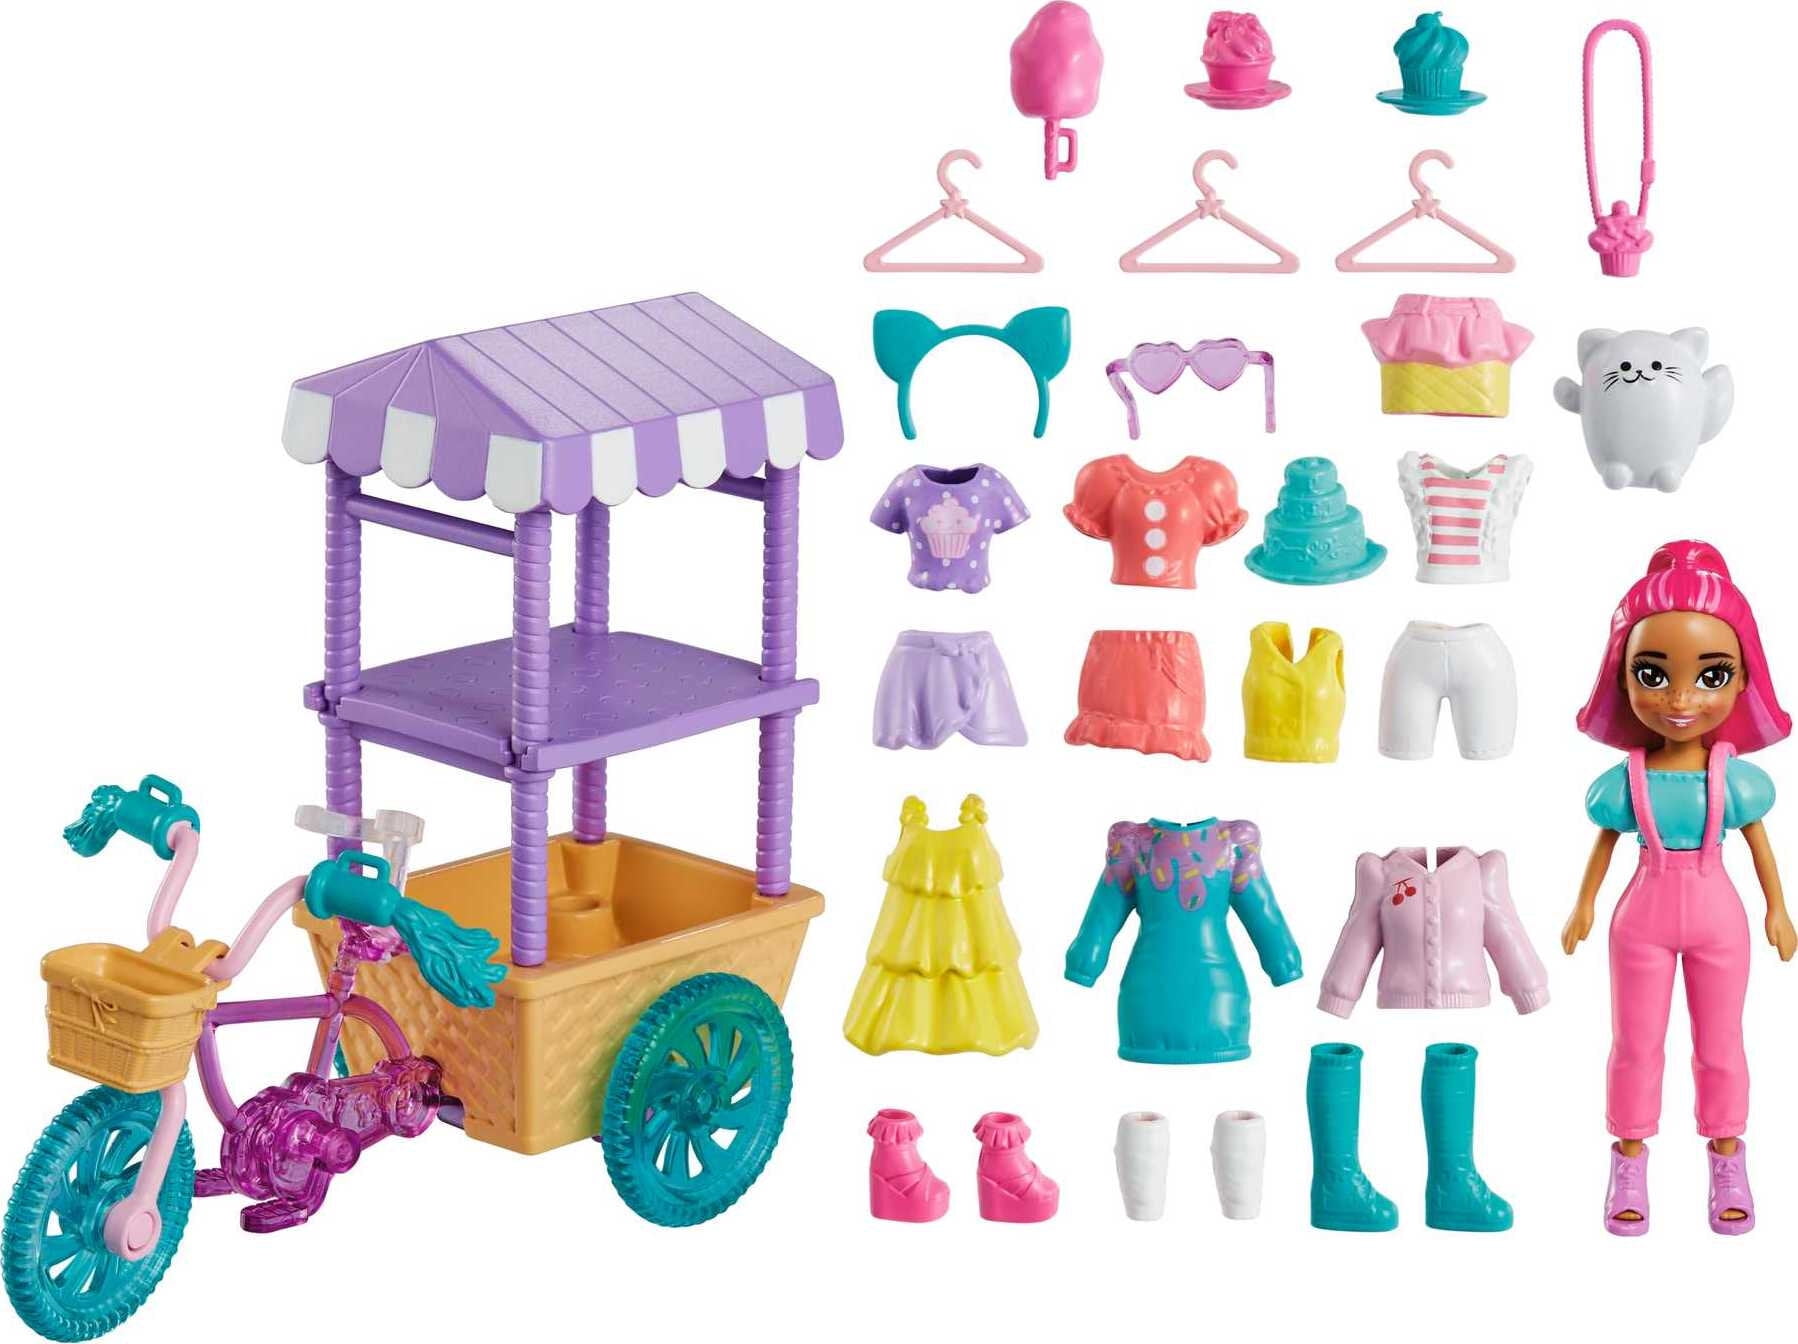 Playset - Polly Pocket - Polly - Shopping Center Doces Surpresas - Mattel